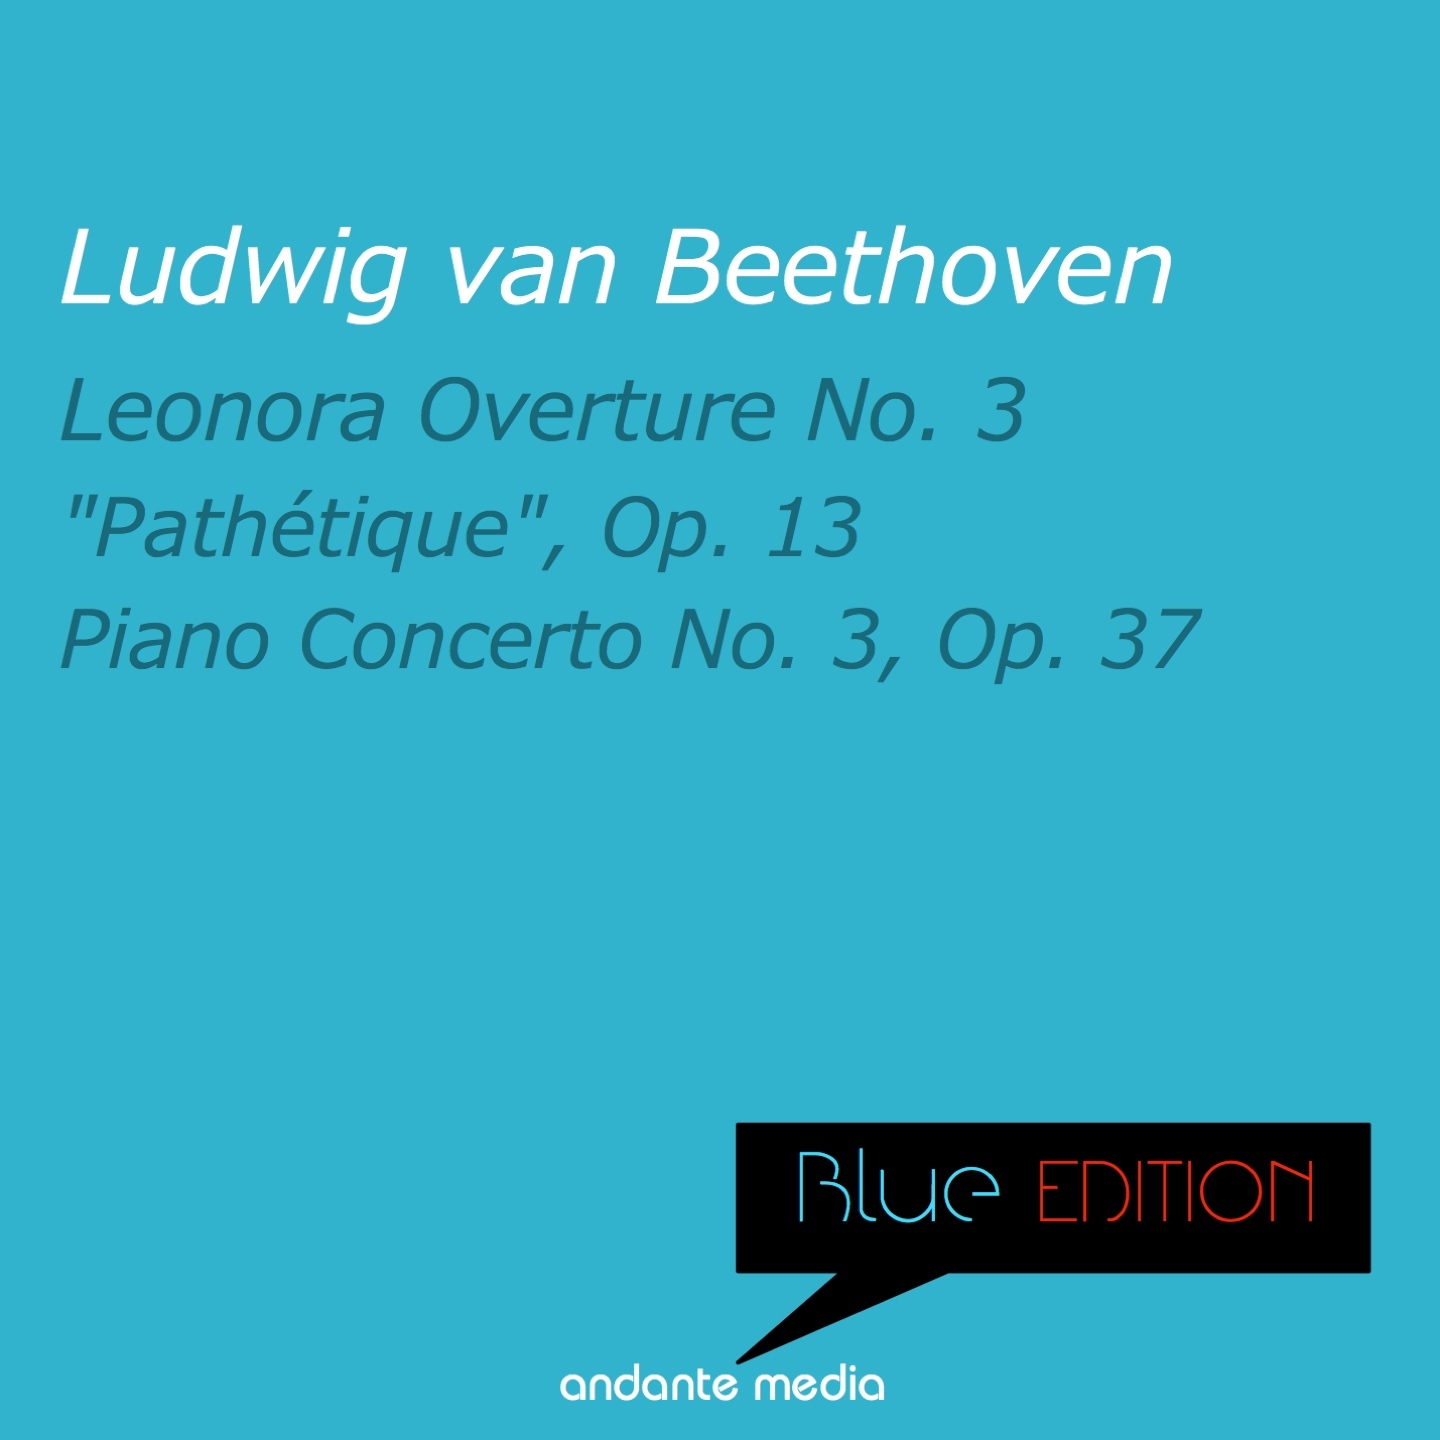 Blue Edition  Beethoven: " Pathe tique", Op. 13  Piano Concerto No. 3, Op. 37